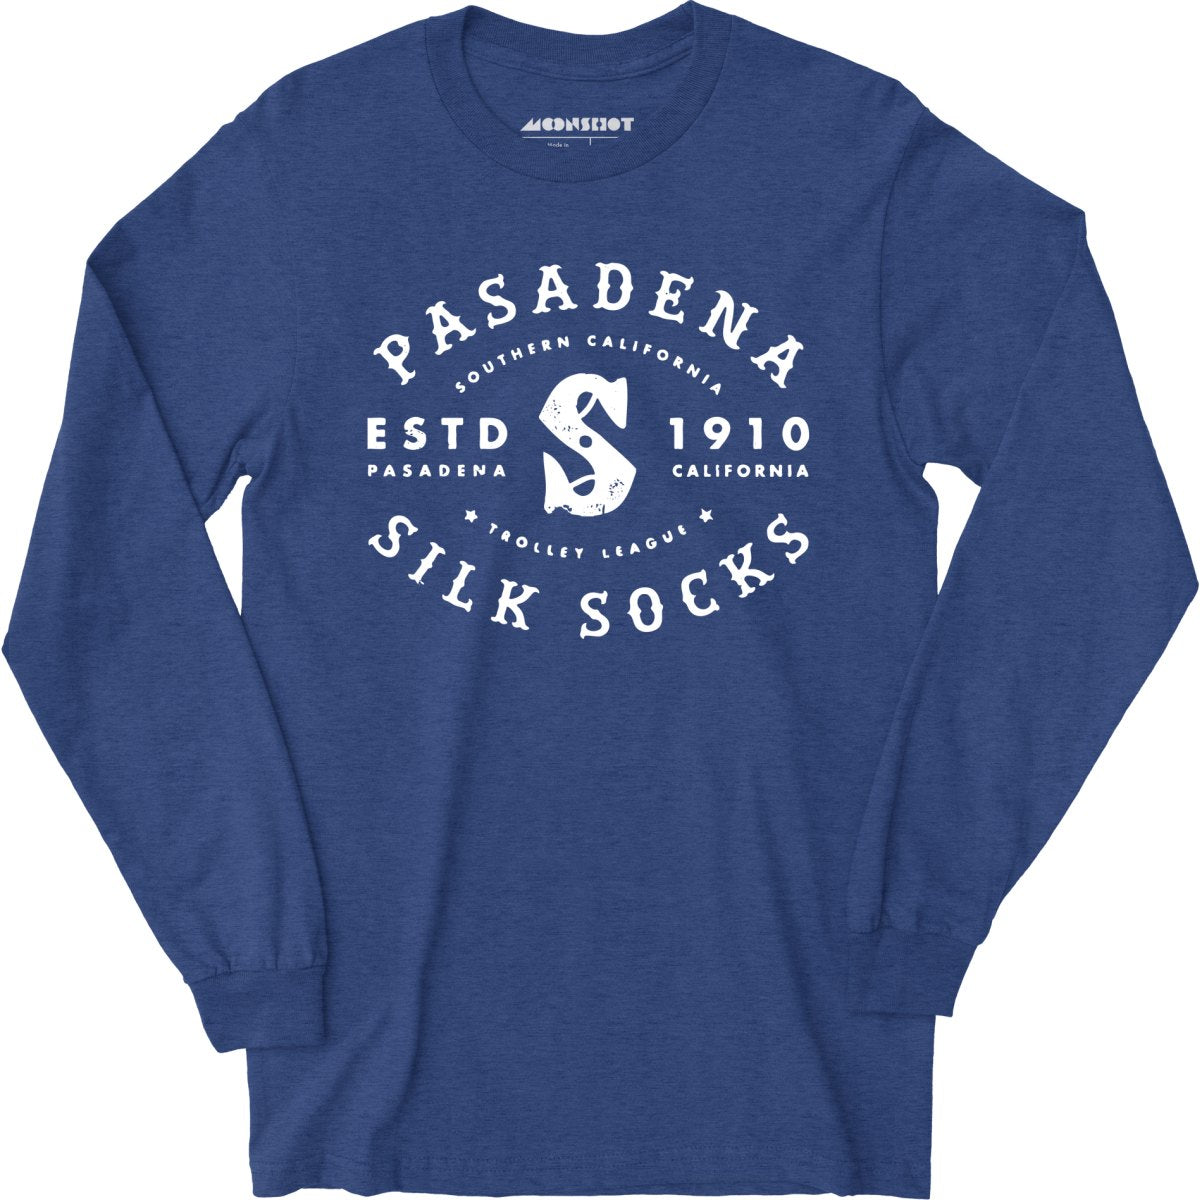 Pasadena Silk Socks - California - Vintage Defunct Baseball Teams - Long Sleeve T-Shirt